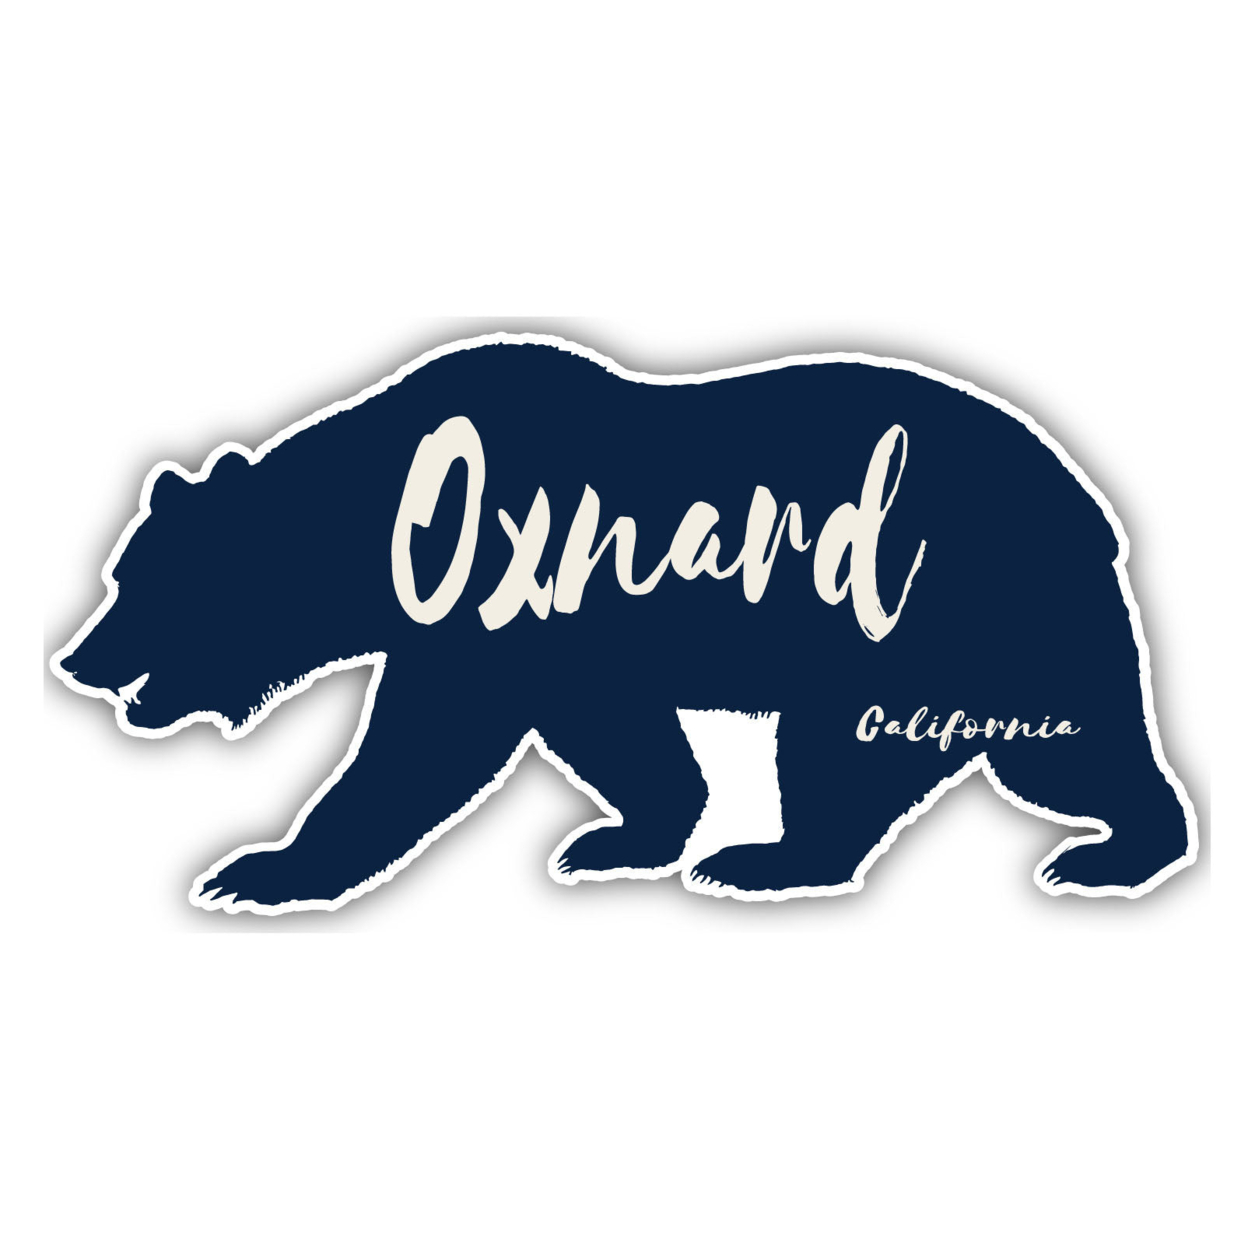 Oxnard California Souvenir Decorative Stickers (Choose Theme And Size) - Single Unit, 2-Inch, Tent